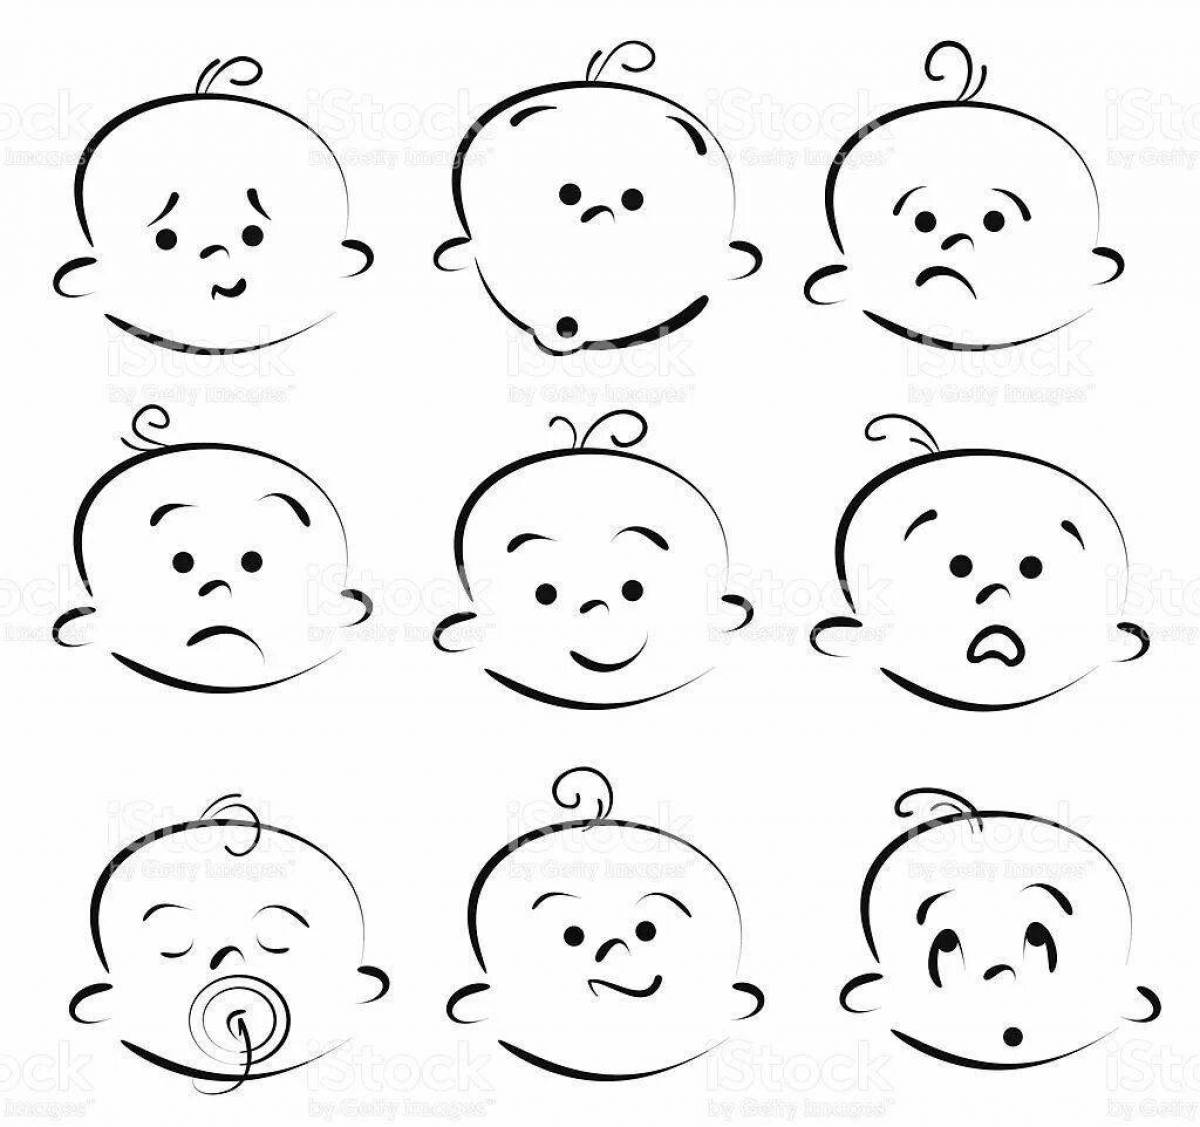 Exuberant emotion coloring pages for preschoolers